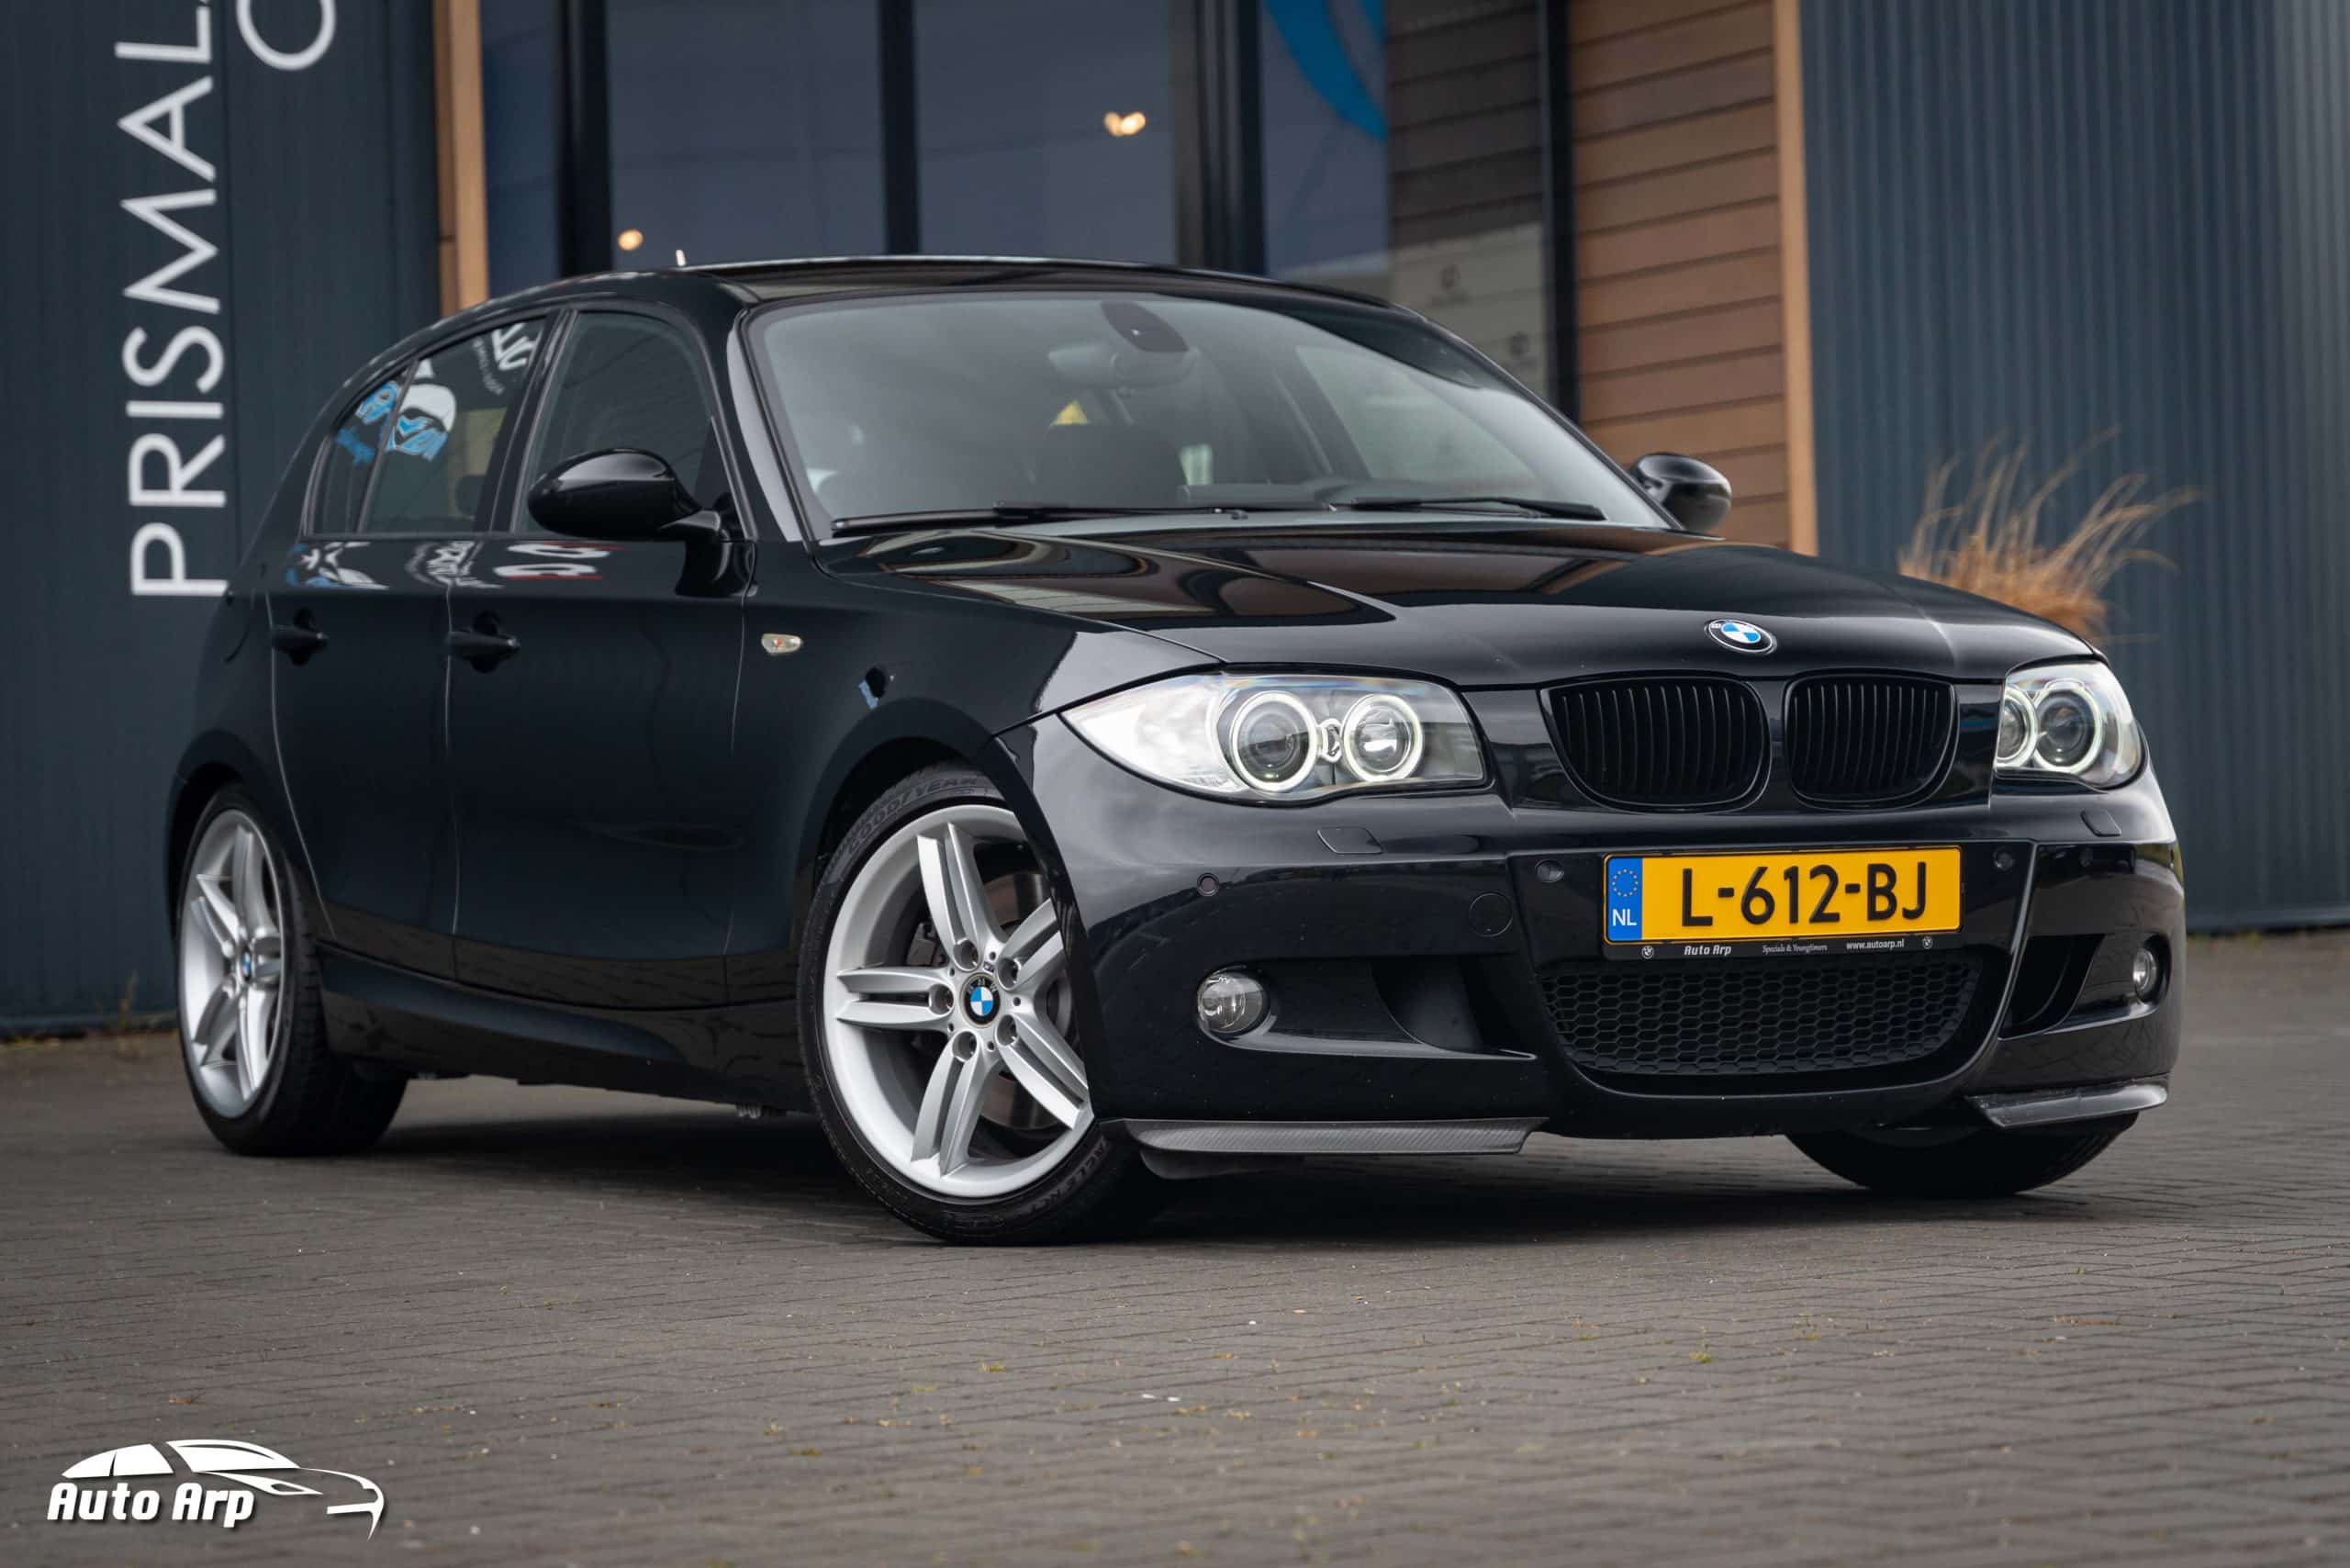 https://www.autoarp.nl/wp-content/uploads/2021/05/ARP-BMW-130-6-van-40-scaled.jpg